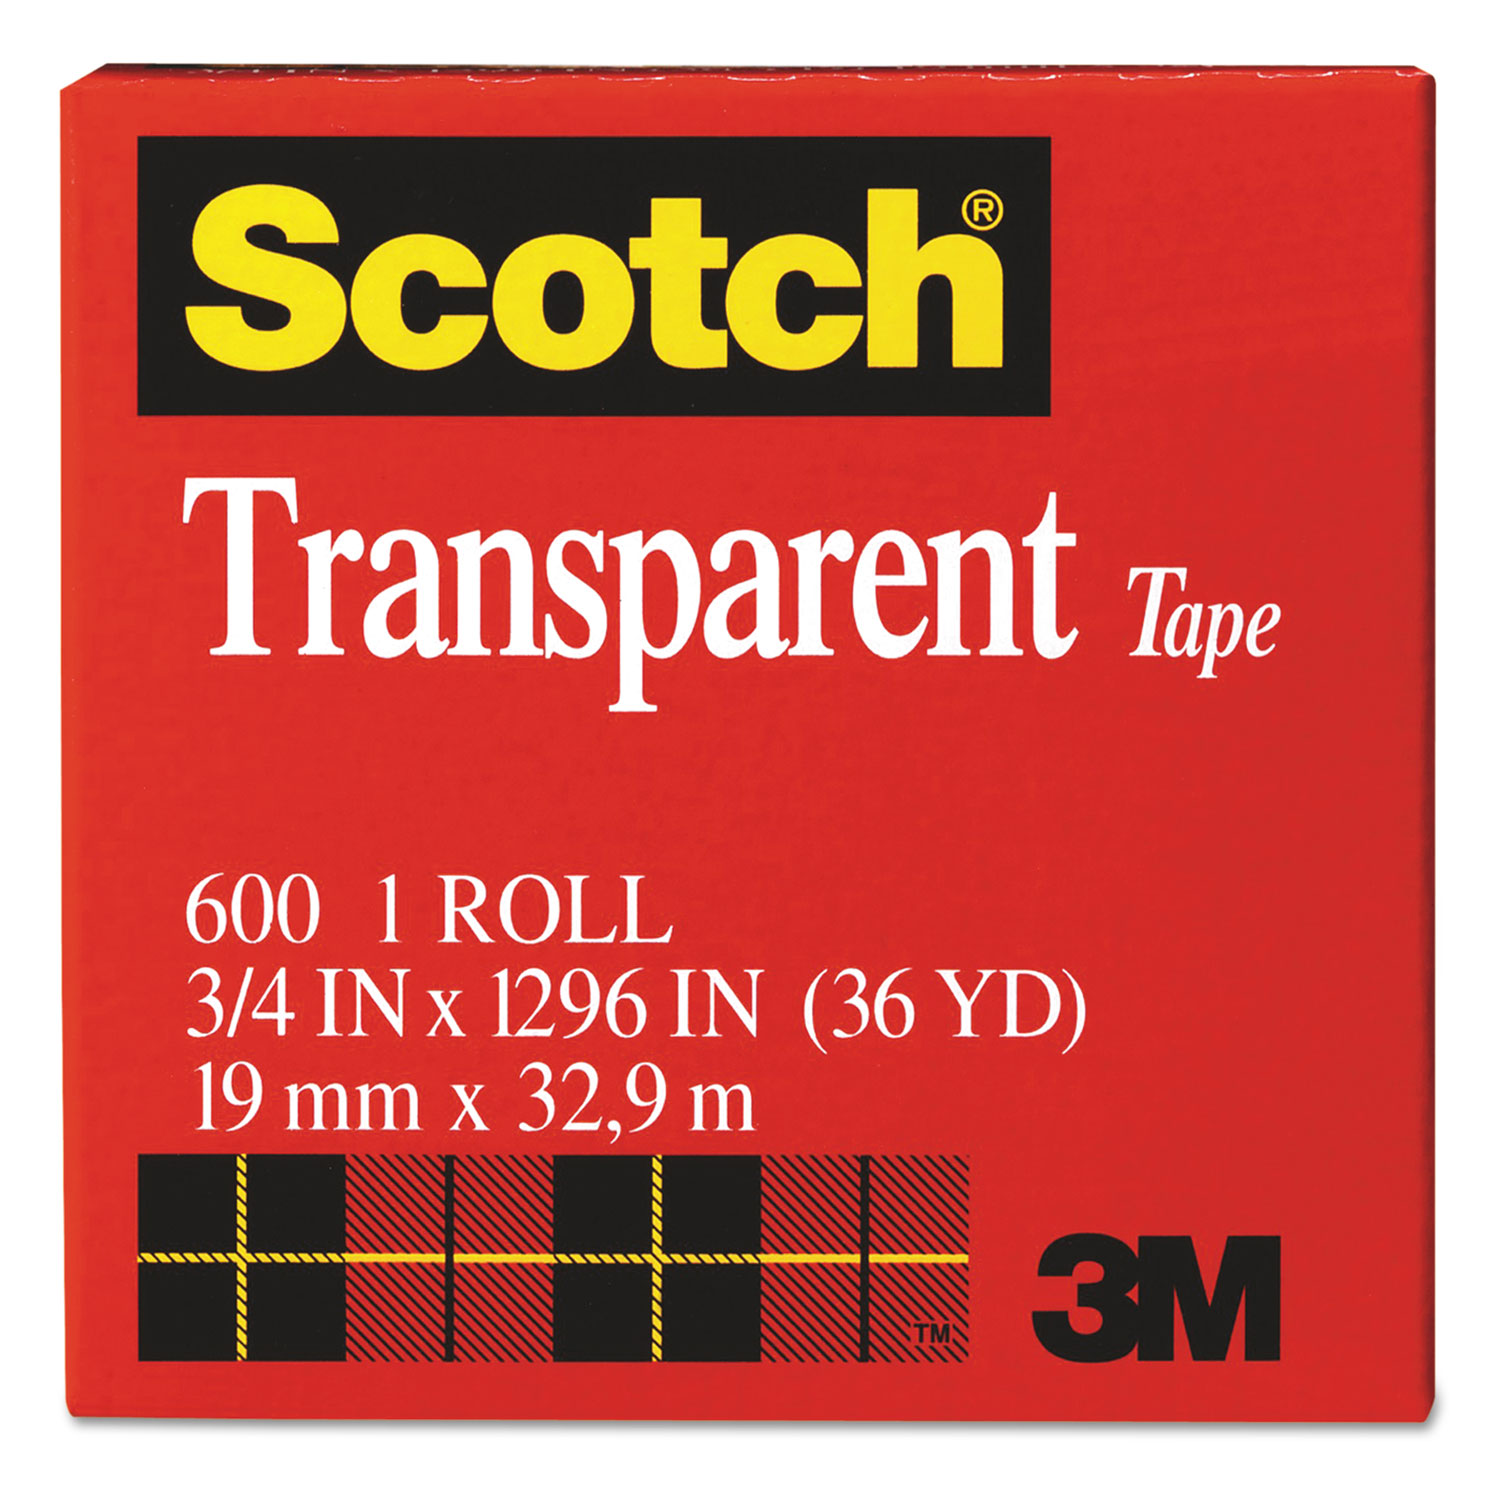 Transparent Tape, 3/4 x 1296, 1 Core, Clear